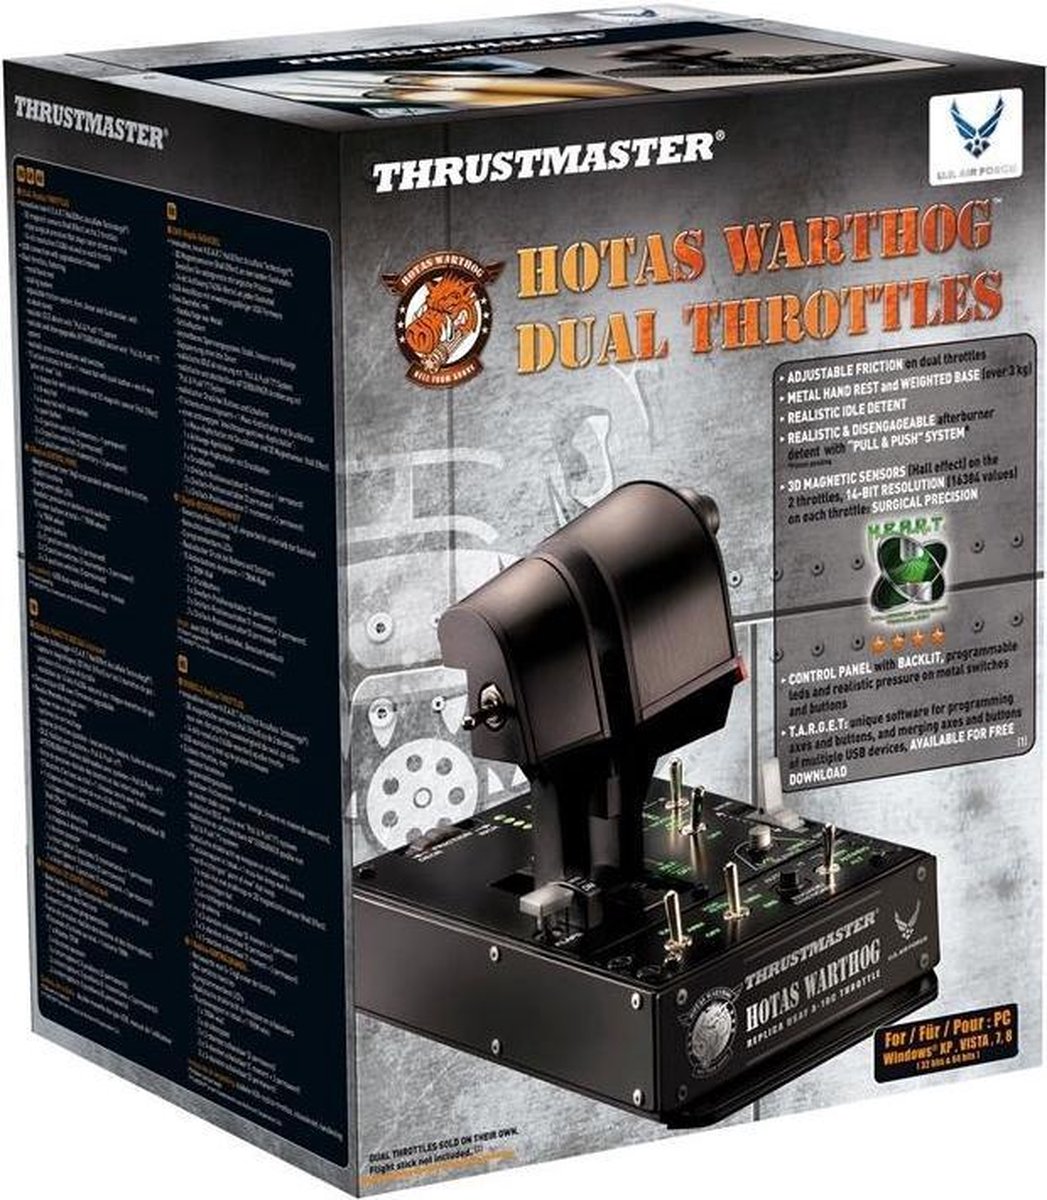 Thrustmaster Hotas Warthog Dual Throttles